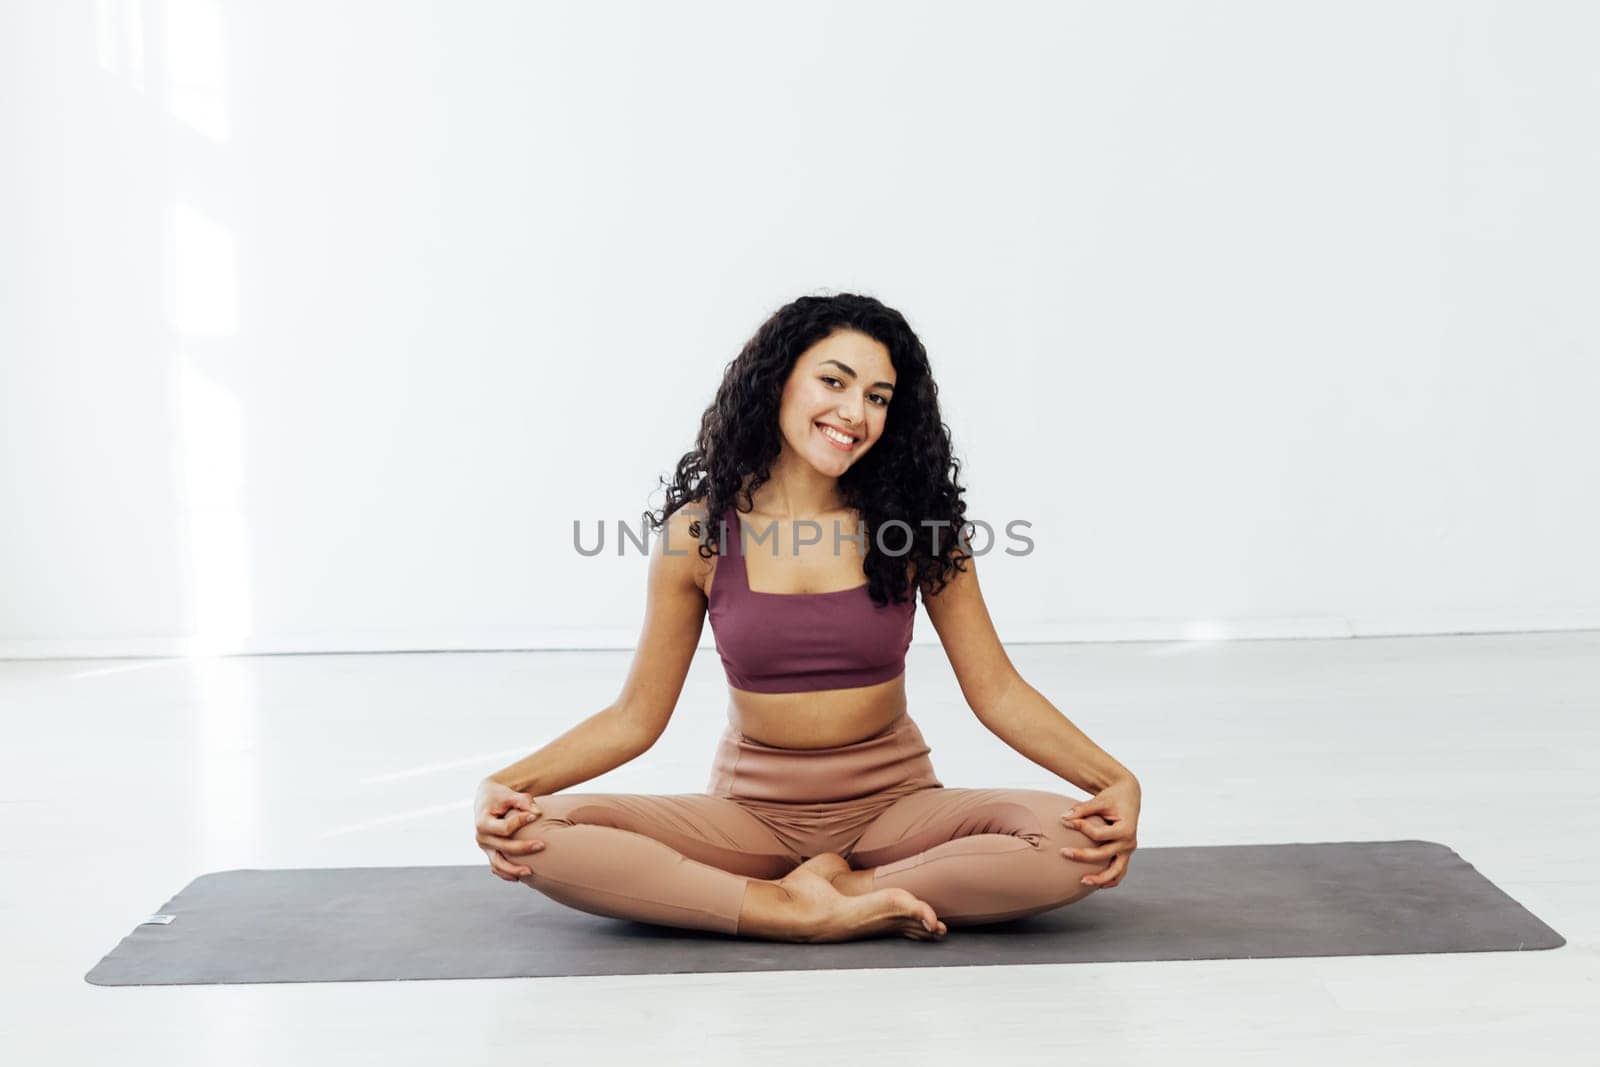 woman on sports acrobatics yoga lotus pose gymnast by Simakov